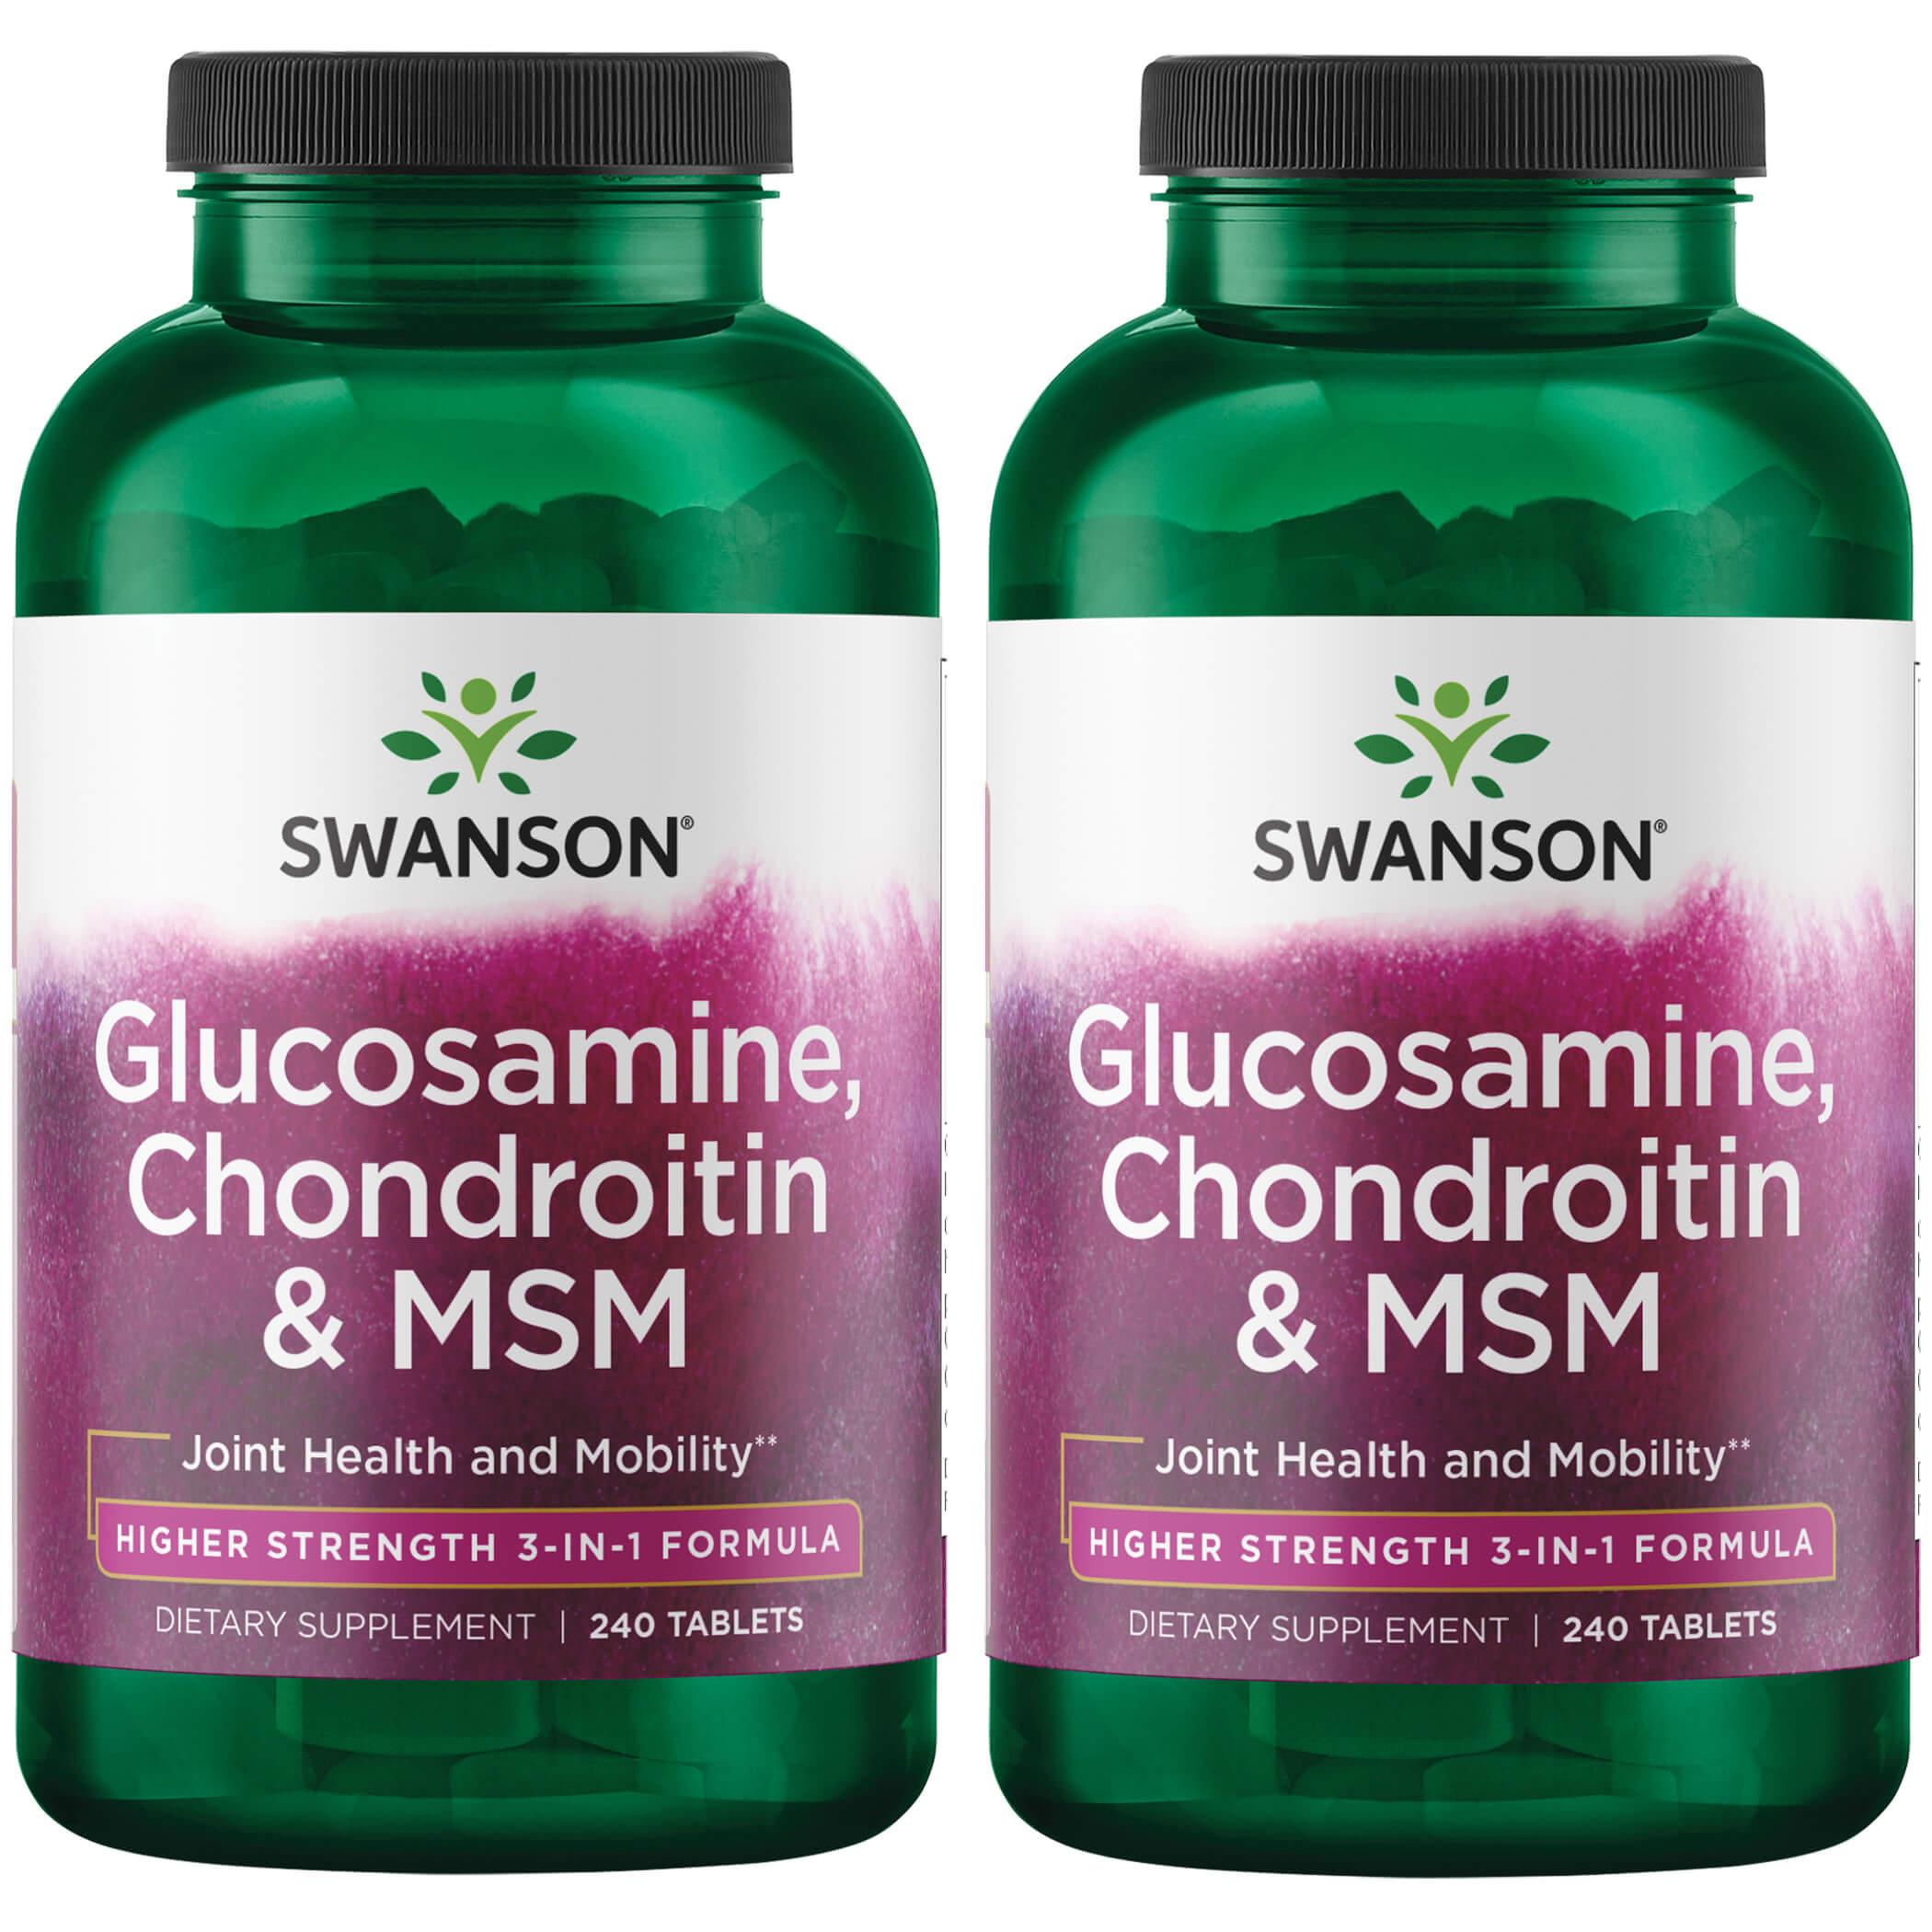 Swanson Premium Glucosamine, Chondroitin & Msm - Higher Strength 2 Pack Supplement Vitamin 240 Tabs